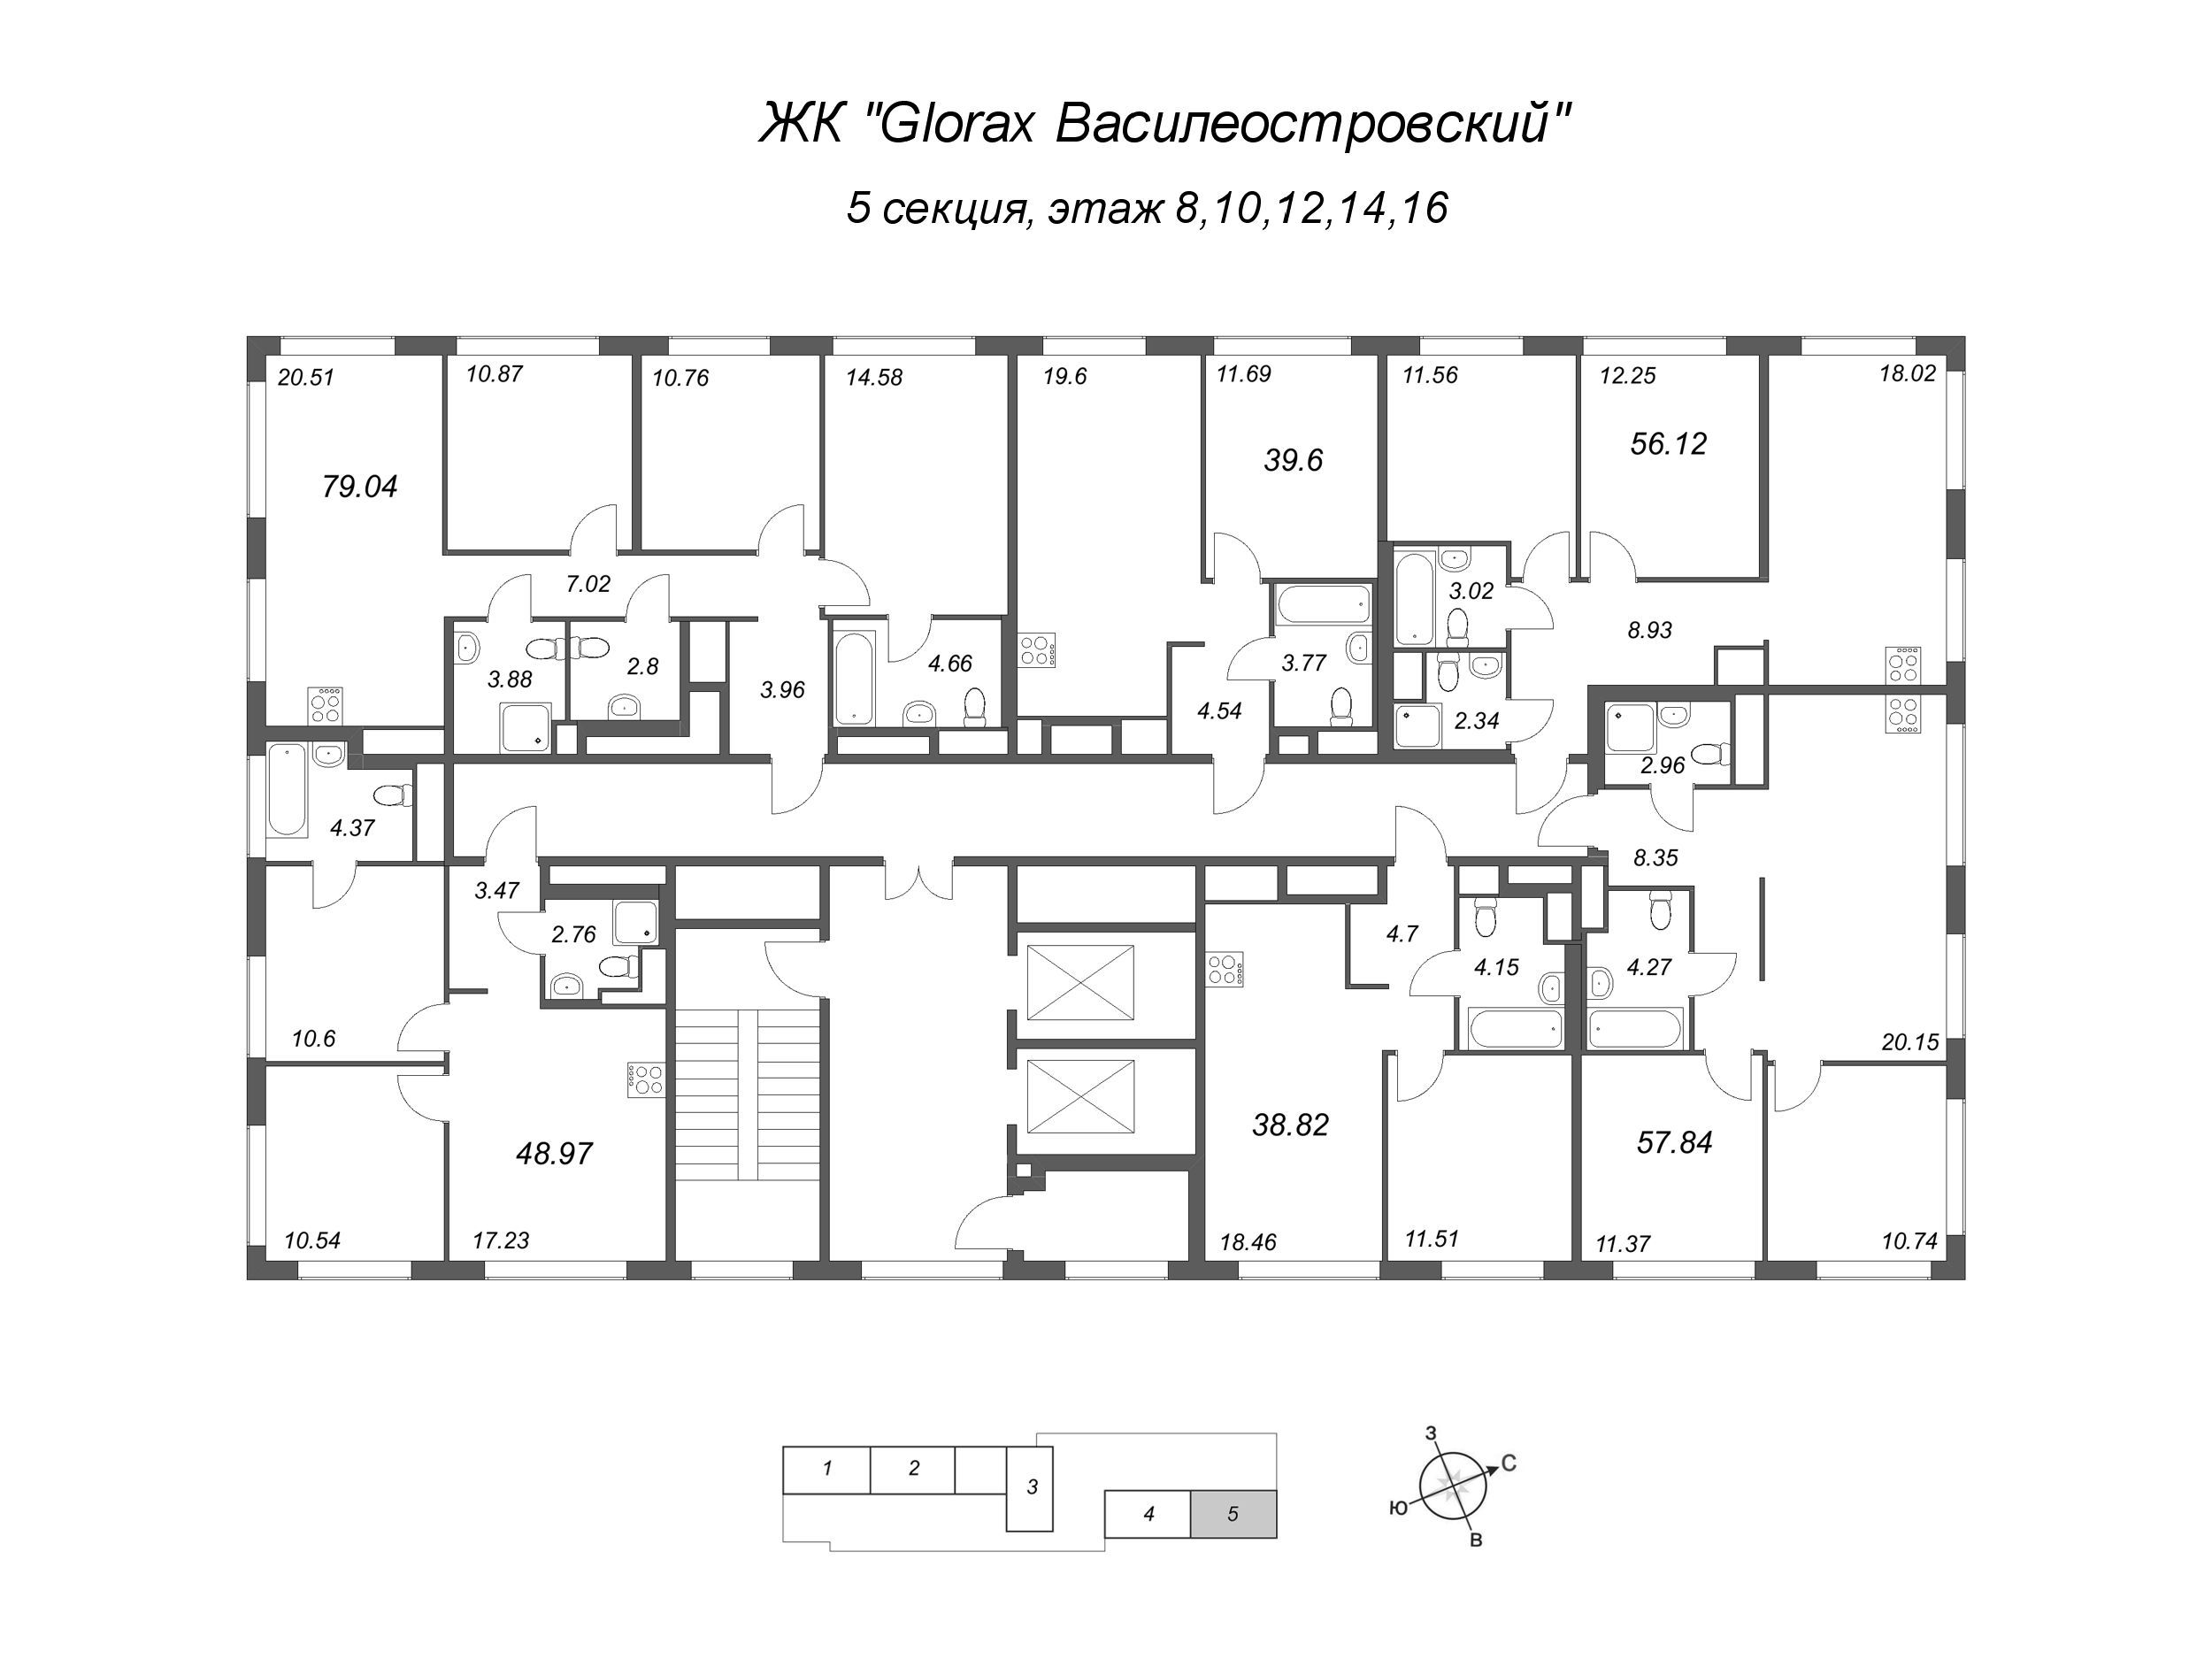 2-комнатная (Евро) квартира, 38.82 м² - планировка этажа